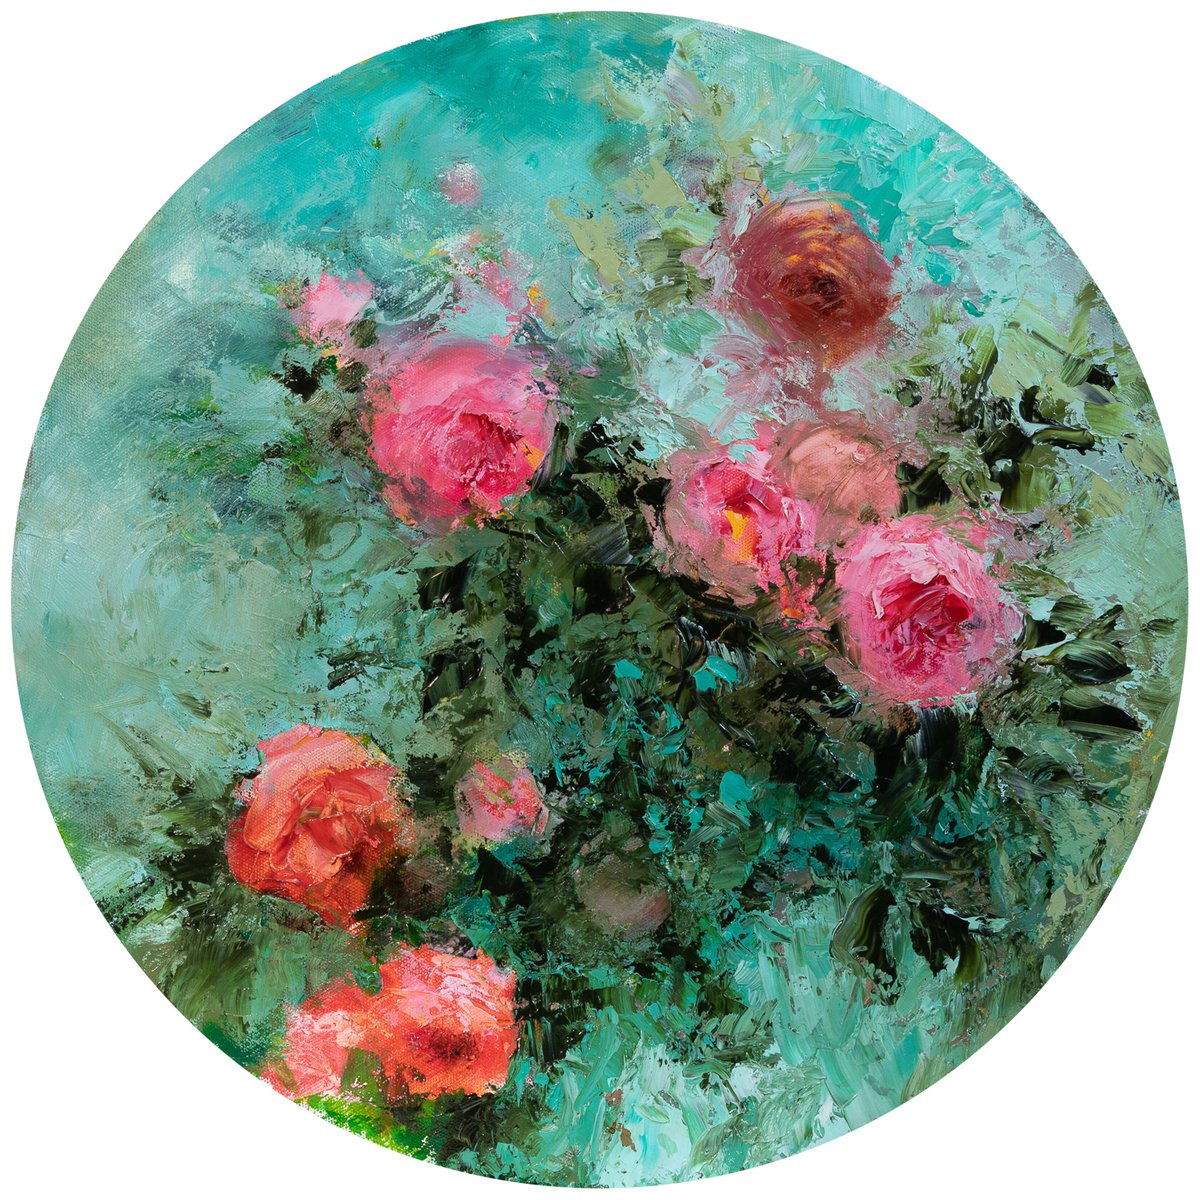 Pompadour tondo with roses - floral impasto oil painting by Fabienne Monestier